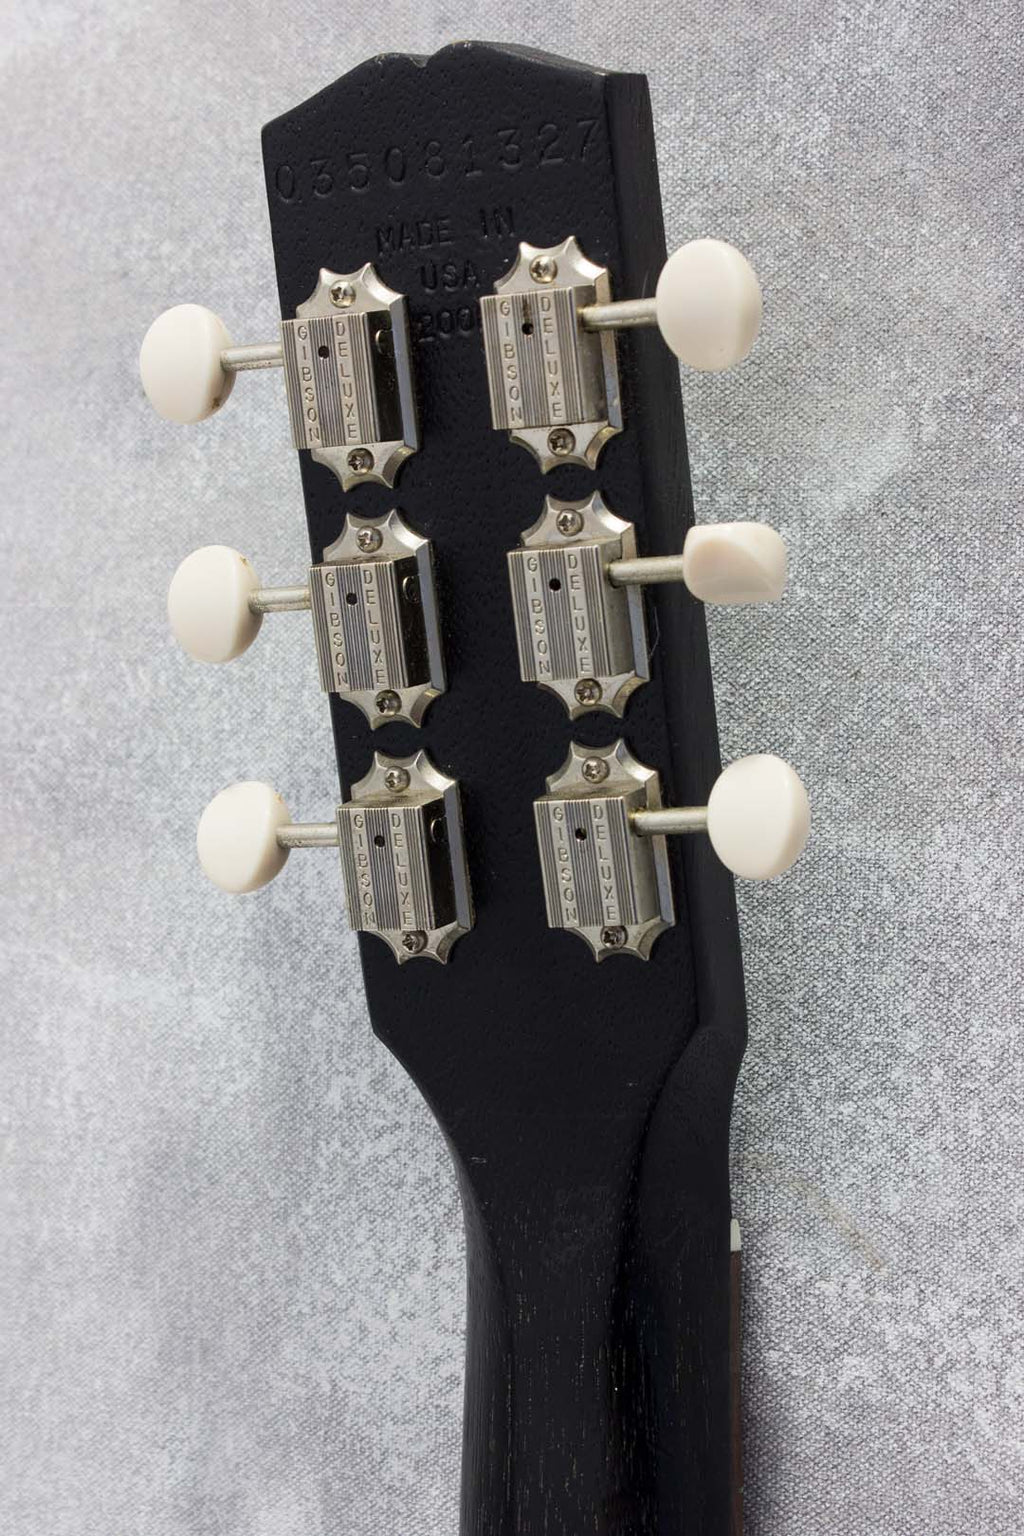 Gibson Les Paul Melody Maker Satin Black 2008